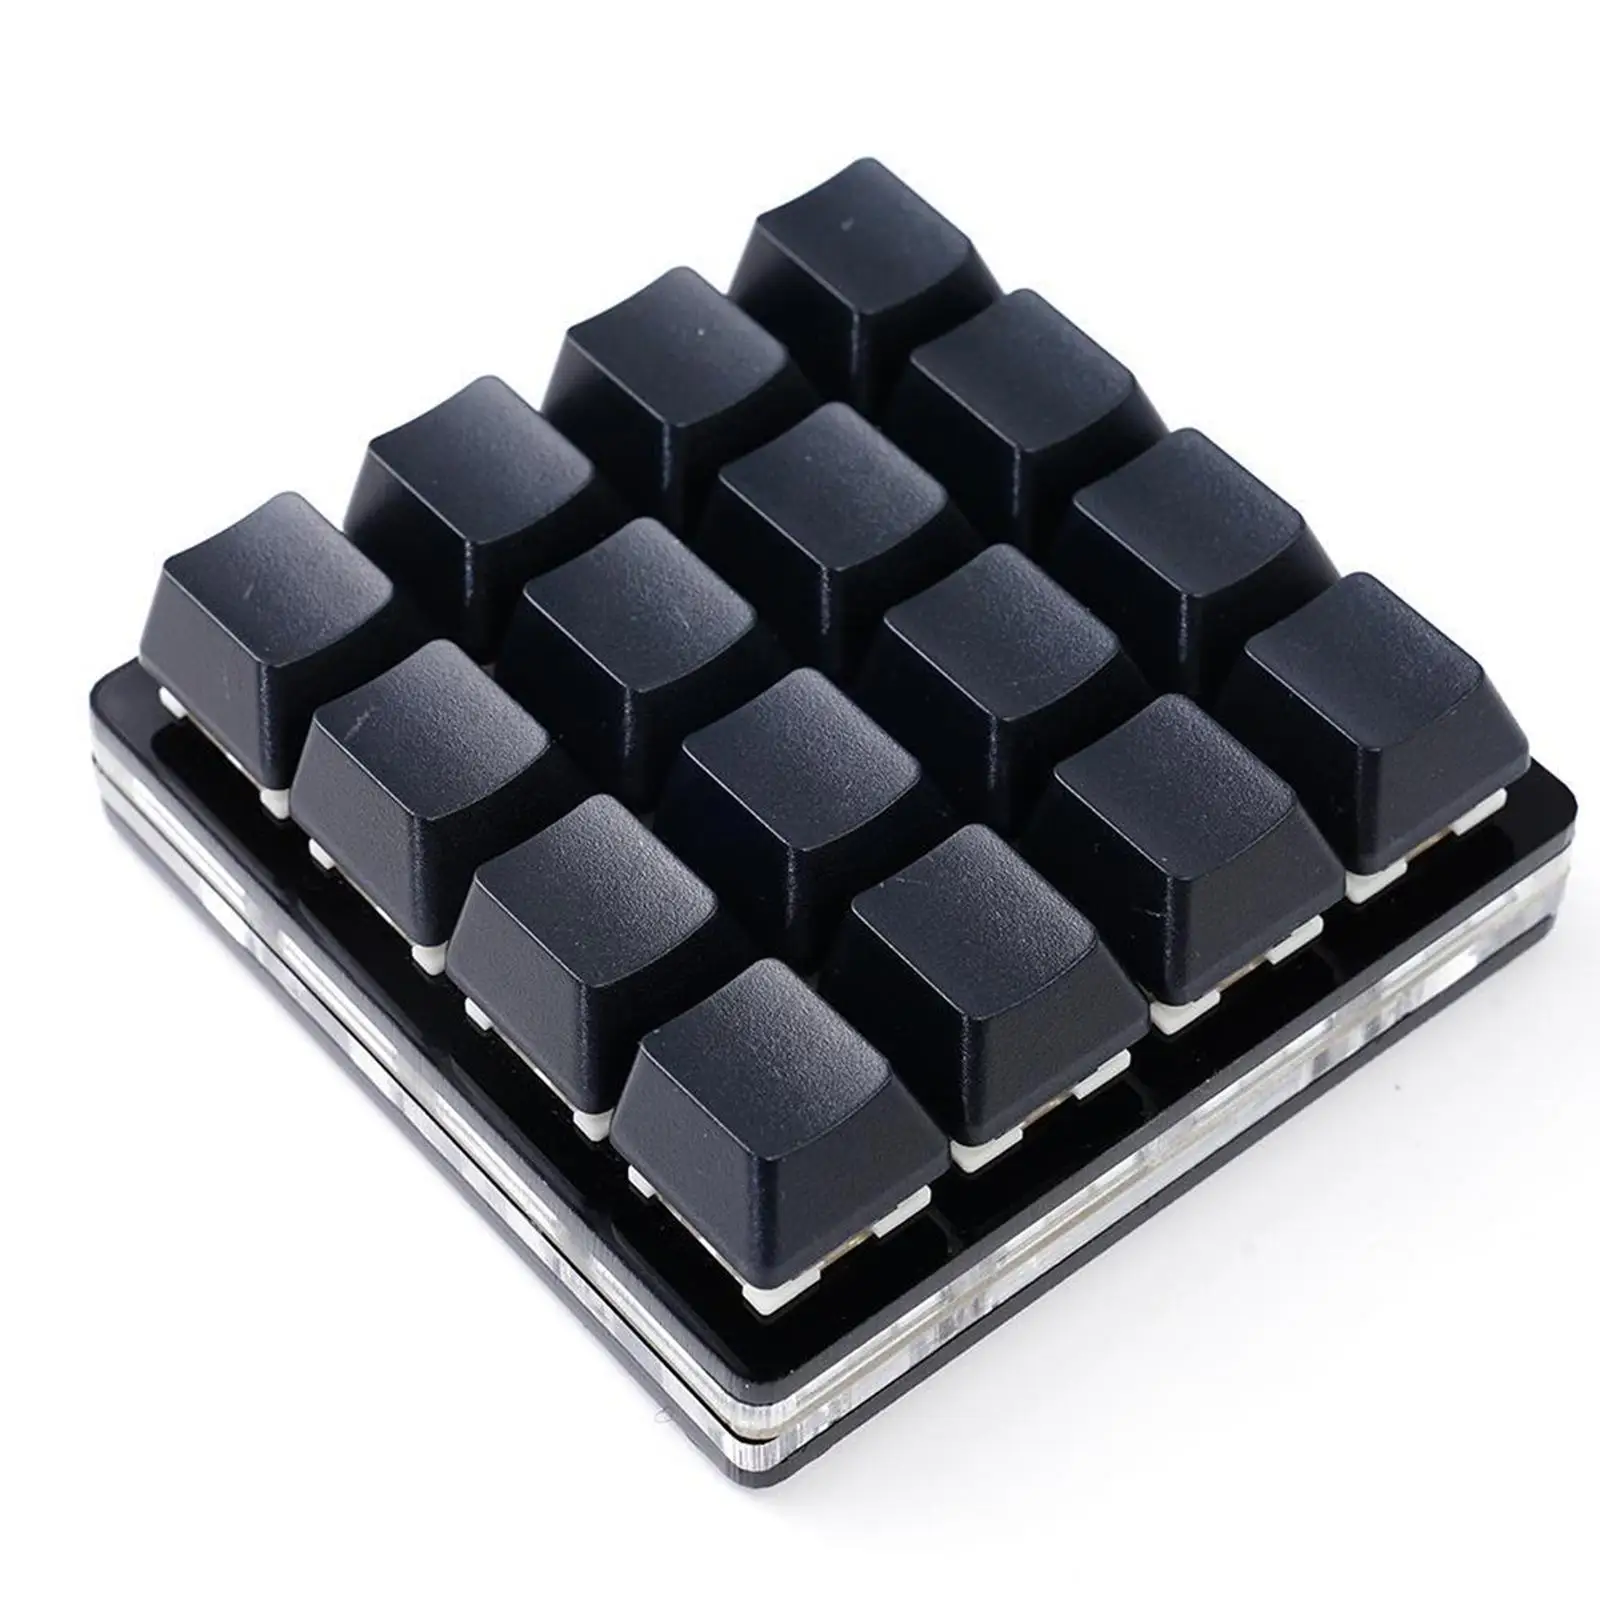 2/3/4/6/7/8/9/16 Keys Black Mini Keypad Numpad Mechanical Keyboard OSU Gaming Programming Custom Keyboard For Photoshop